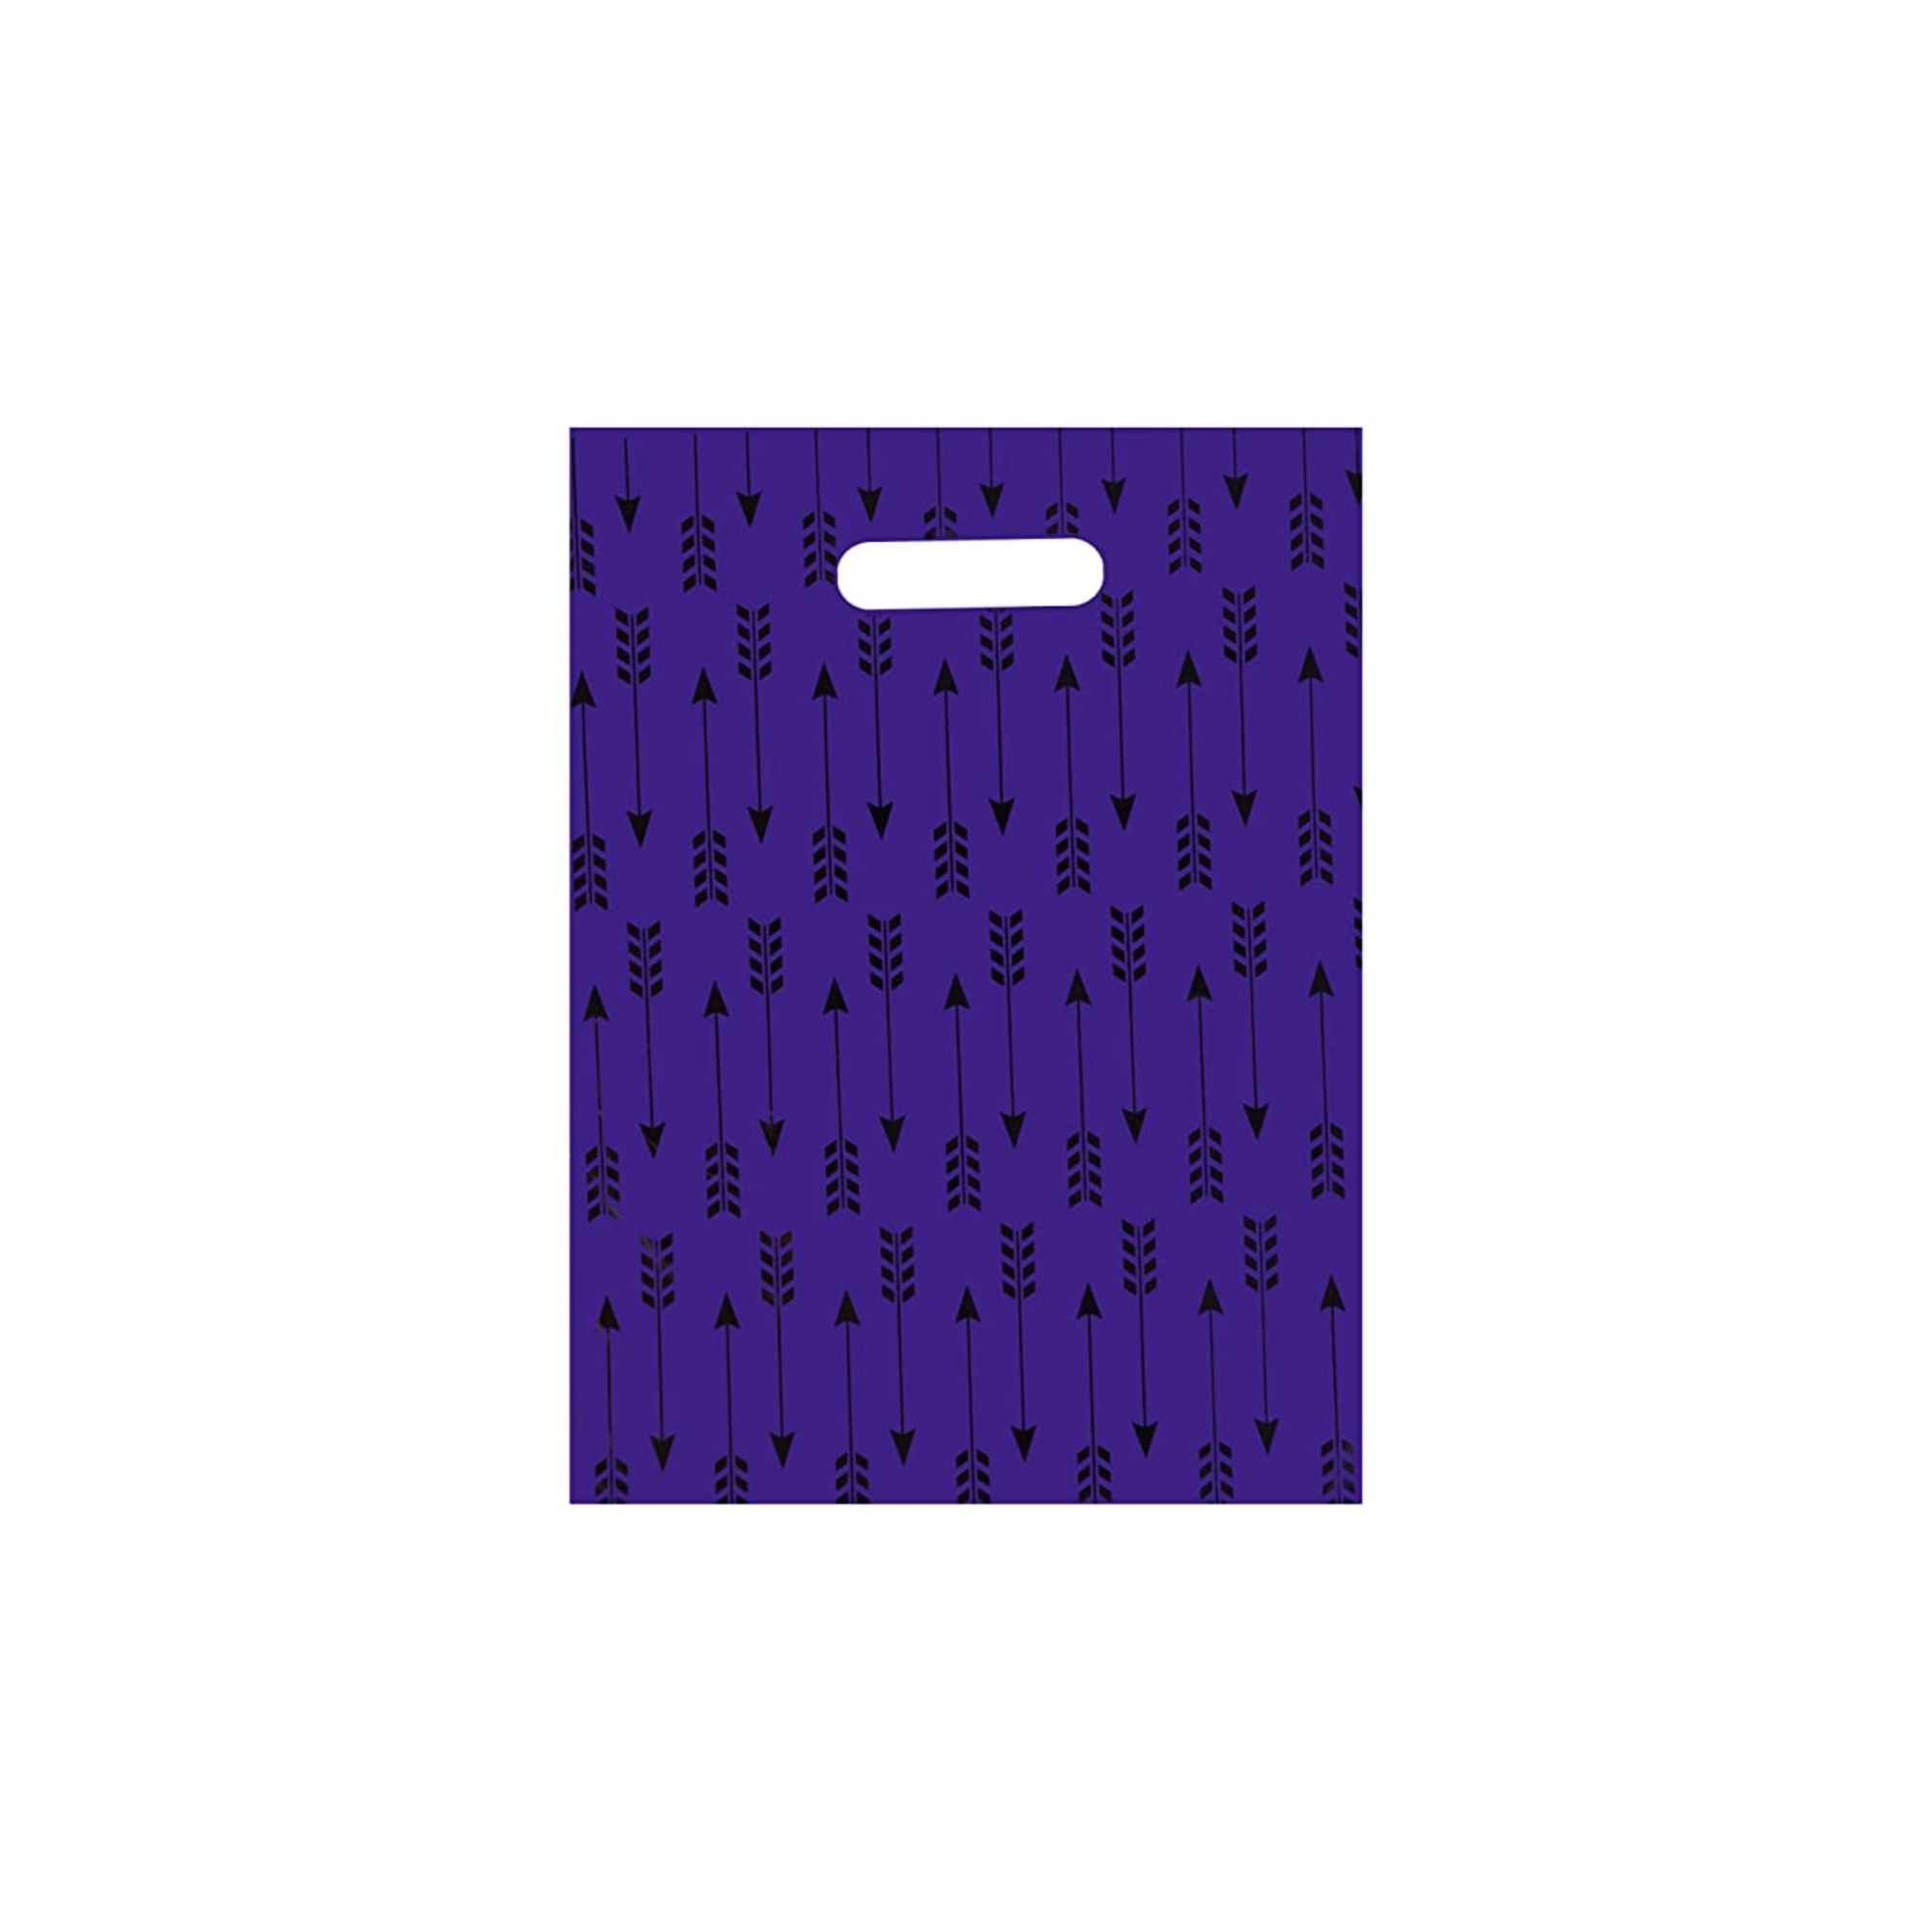 9 x 12 - 100 Pieces Printed Design Merchandise Bags - Infinite Pack